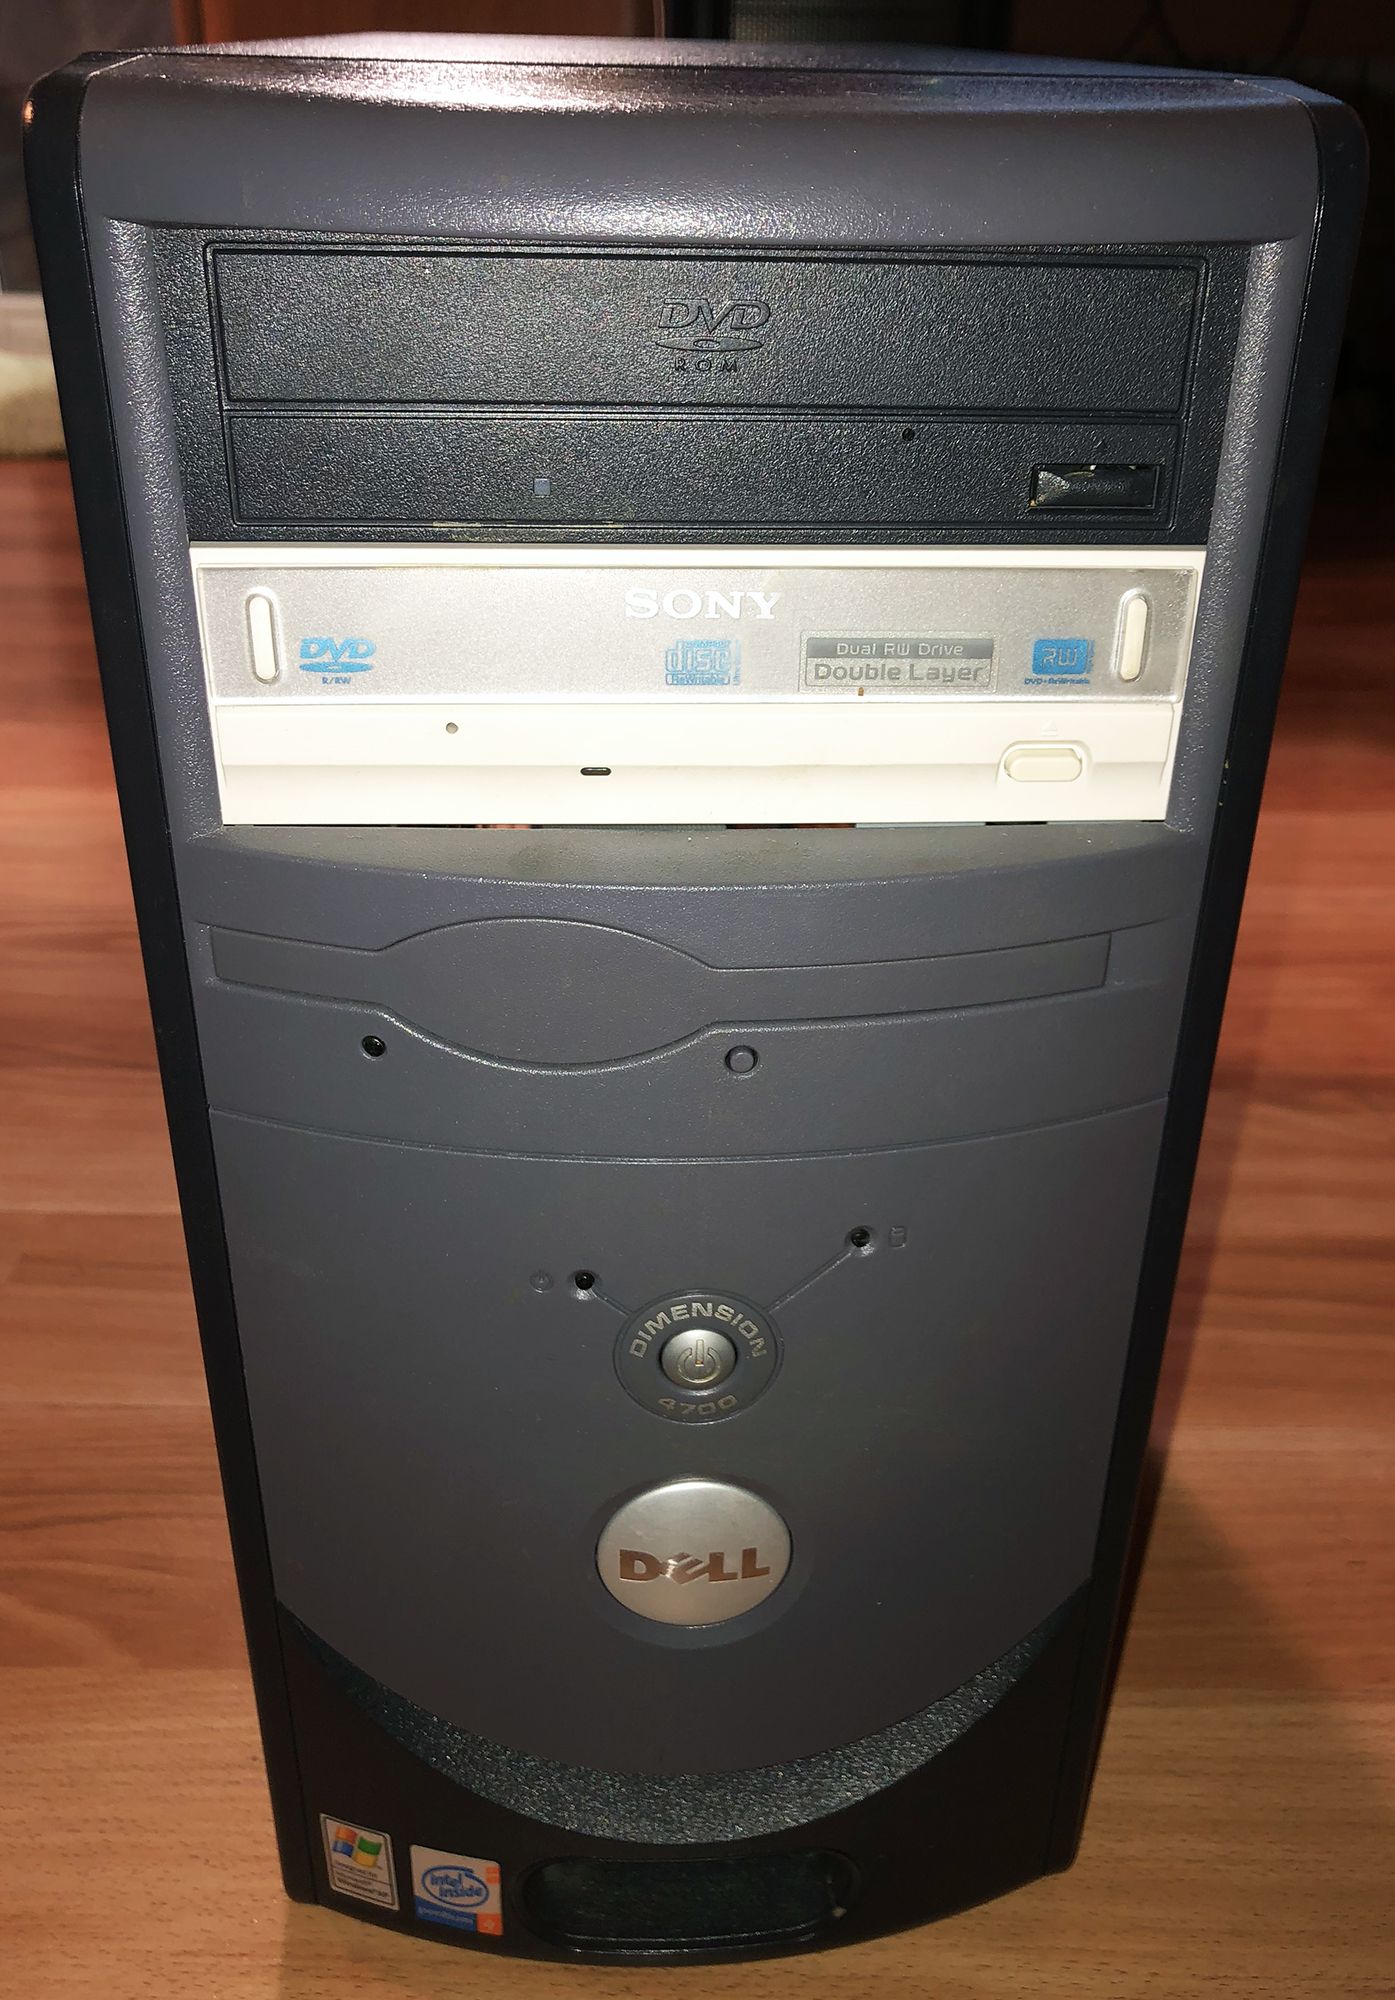 Dell Dimension 4700 PC, Intel Pentium 4, 2.8 GHz, 1GB RAM, 80GB HD